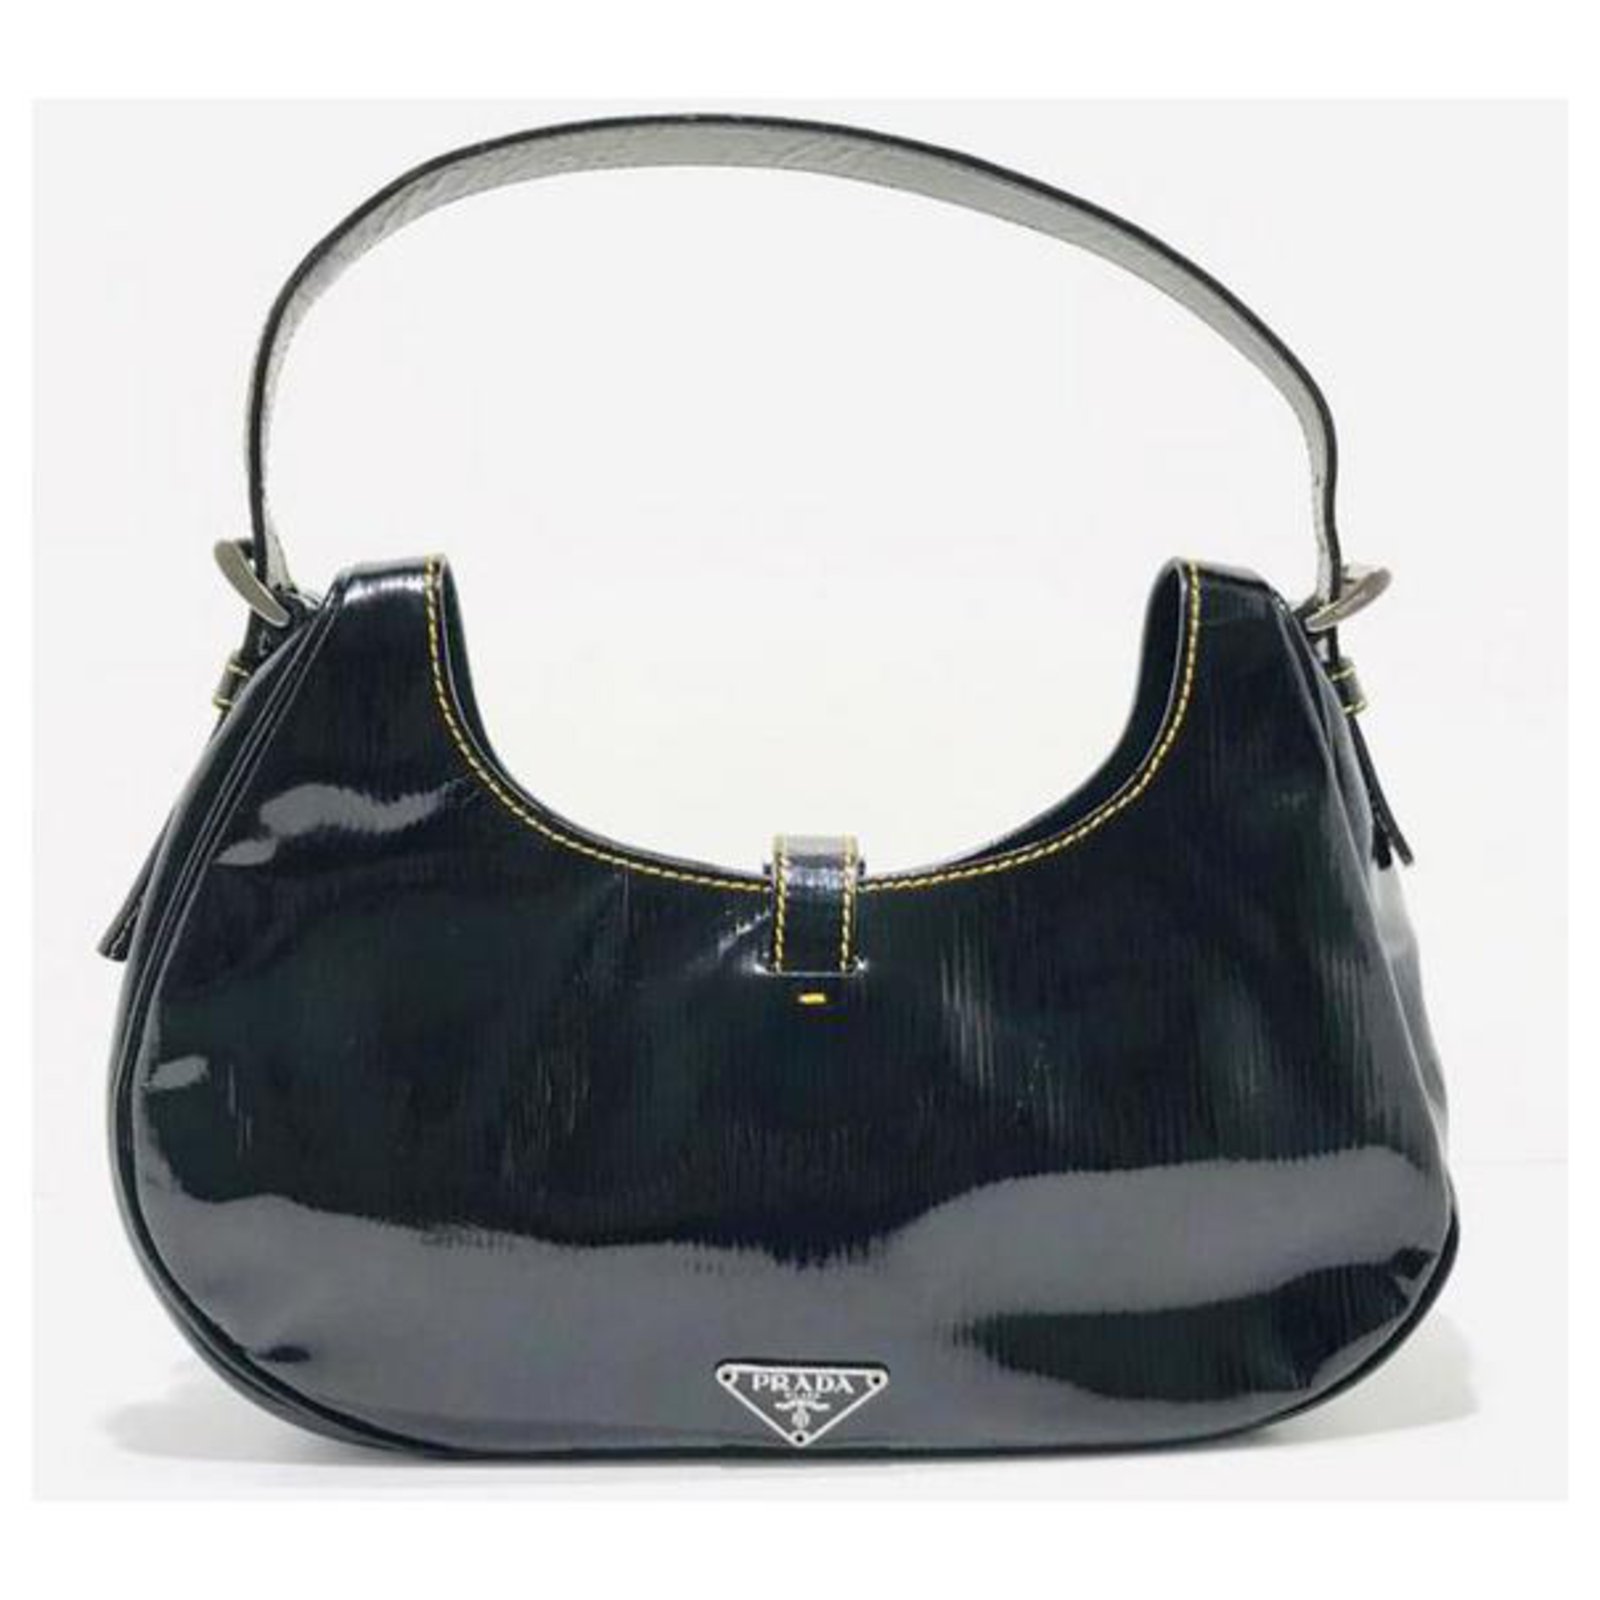 prada patent leather handbag - sjvbca 